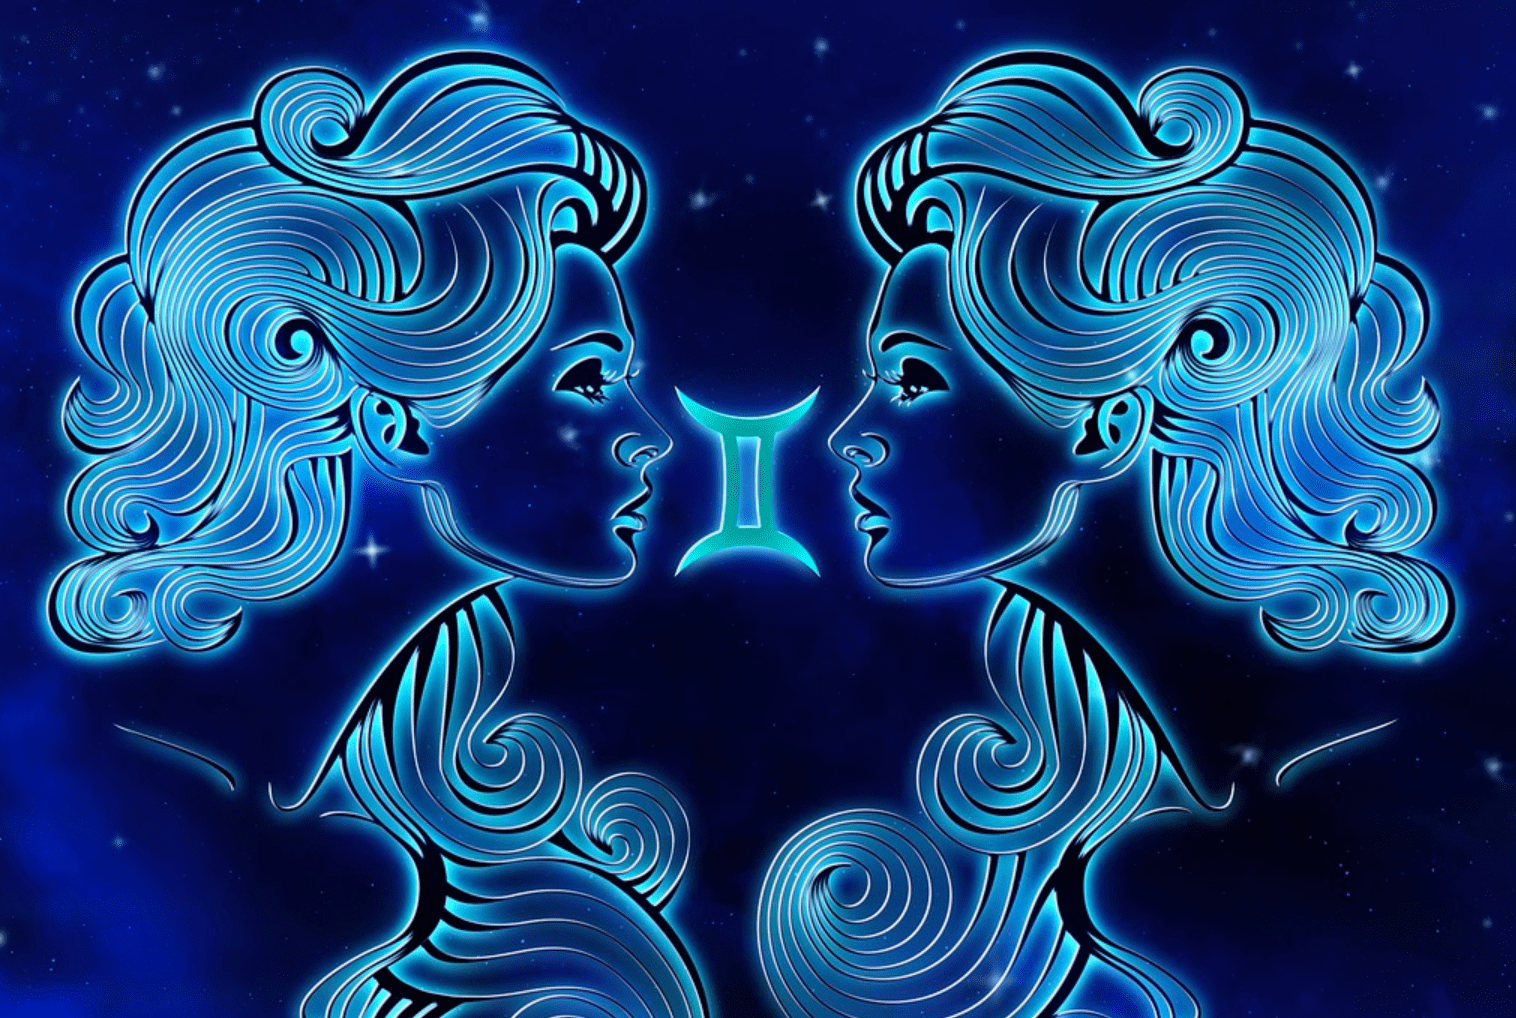 An illustration of the Gemini zodiac sign | Photo: Pixabay/Darkmoon_Art 